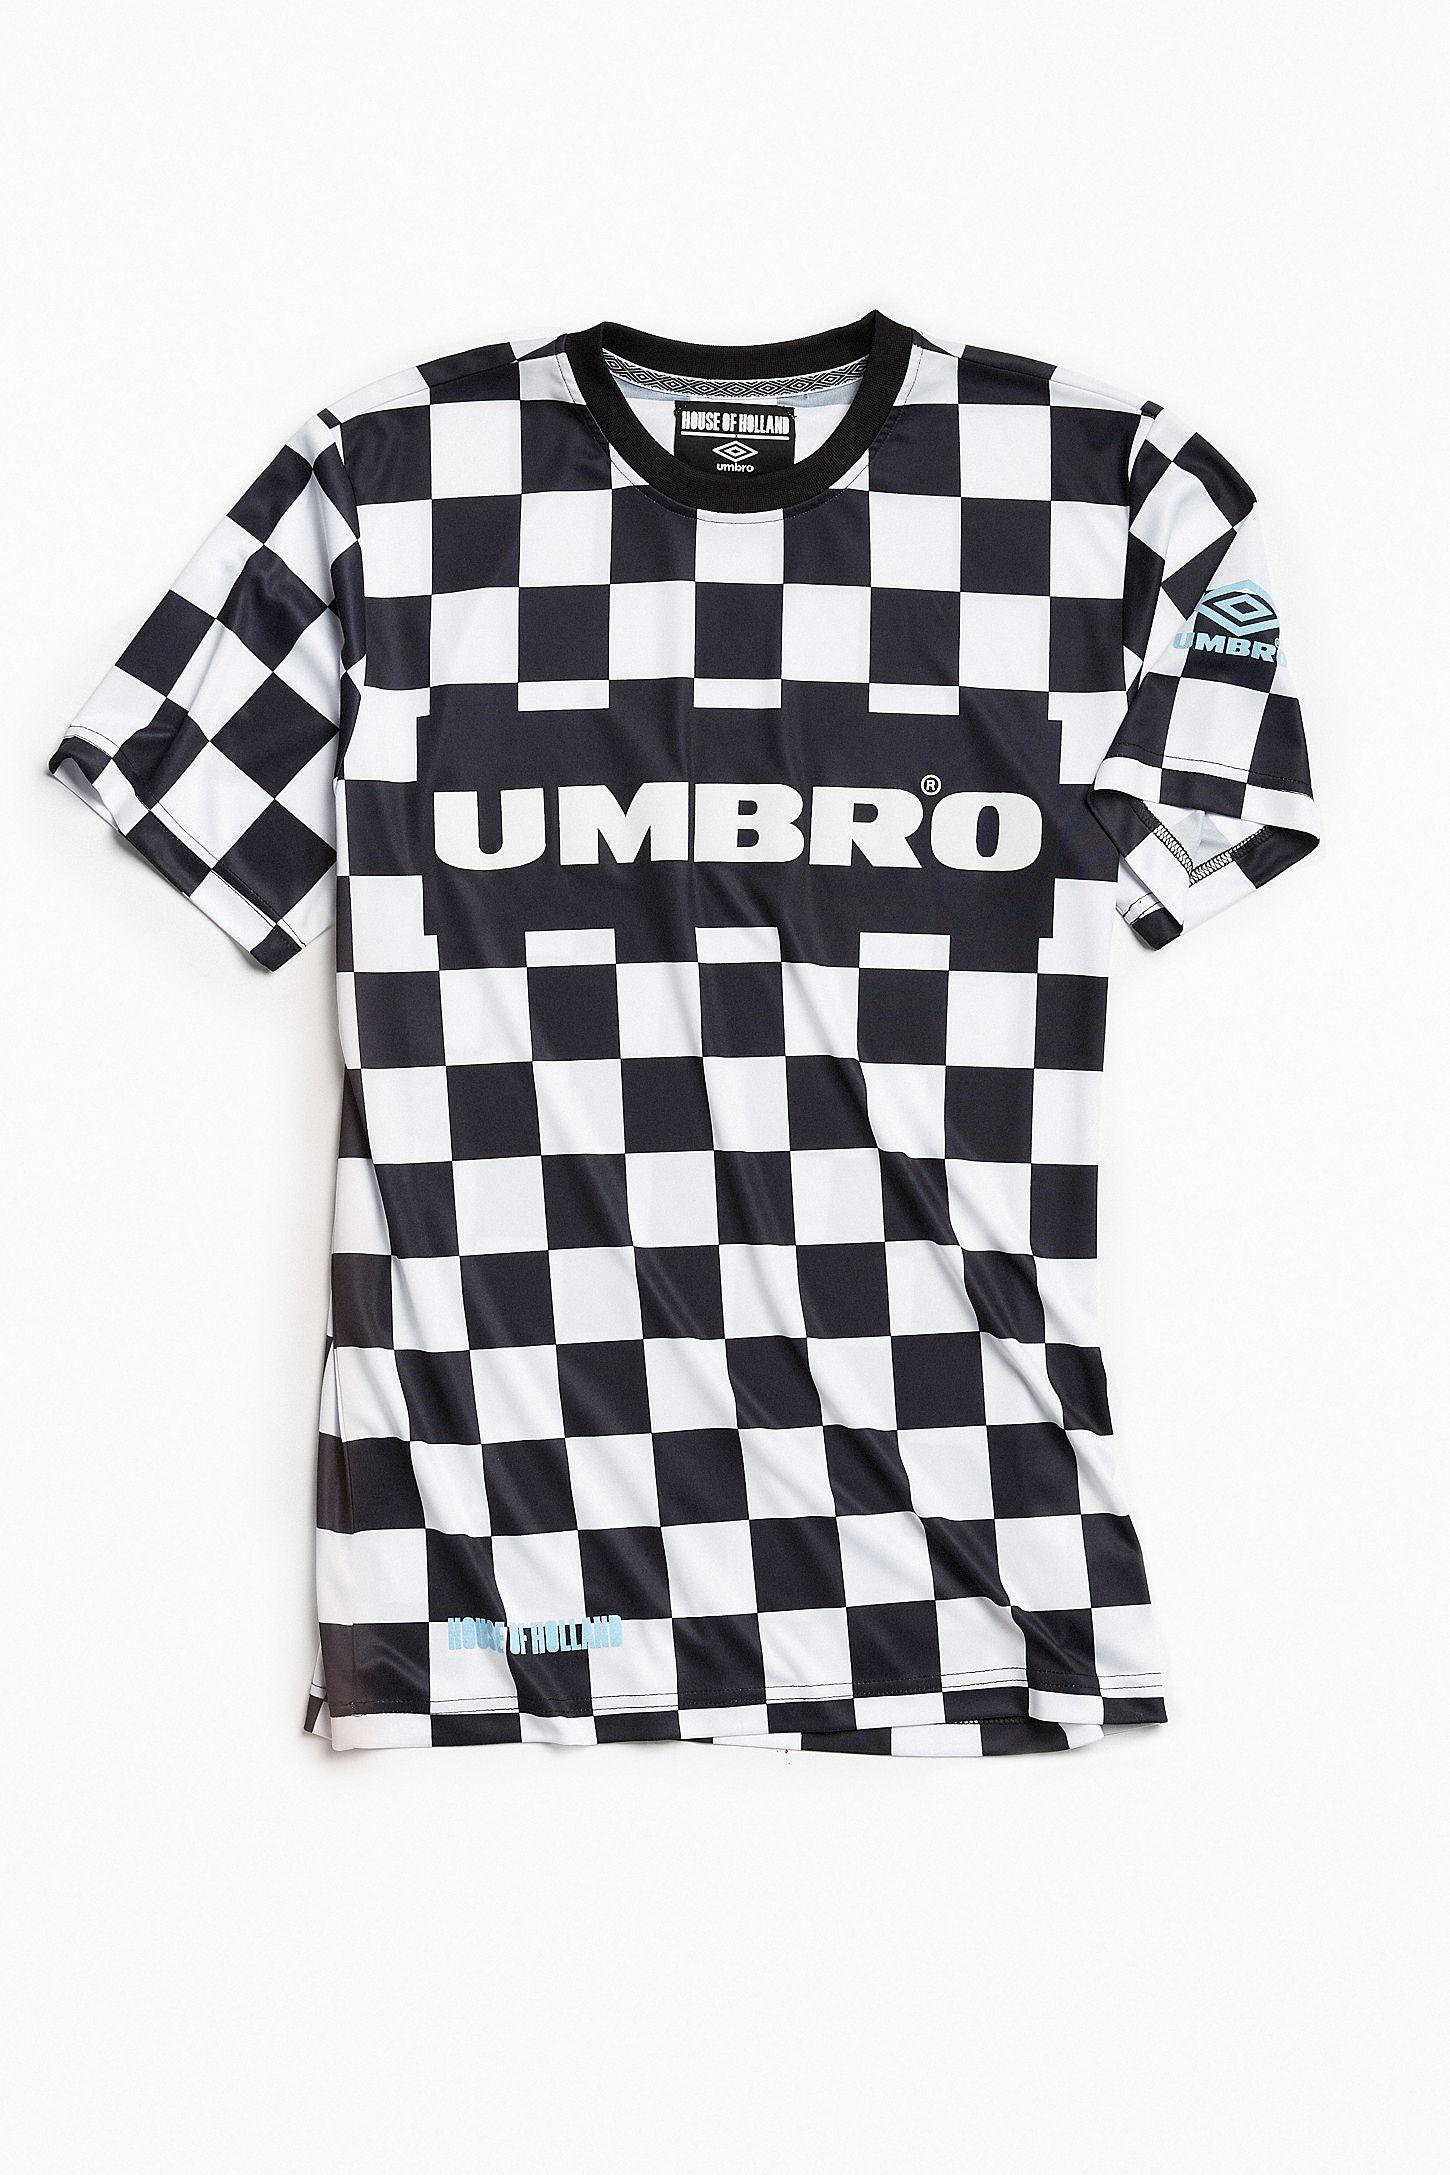 Black and White Checkered Logo - Umbro X House Of Holland Black + White Checkered Football Jersey